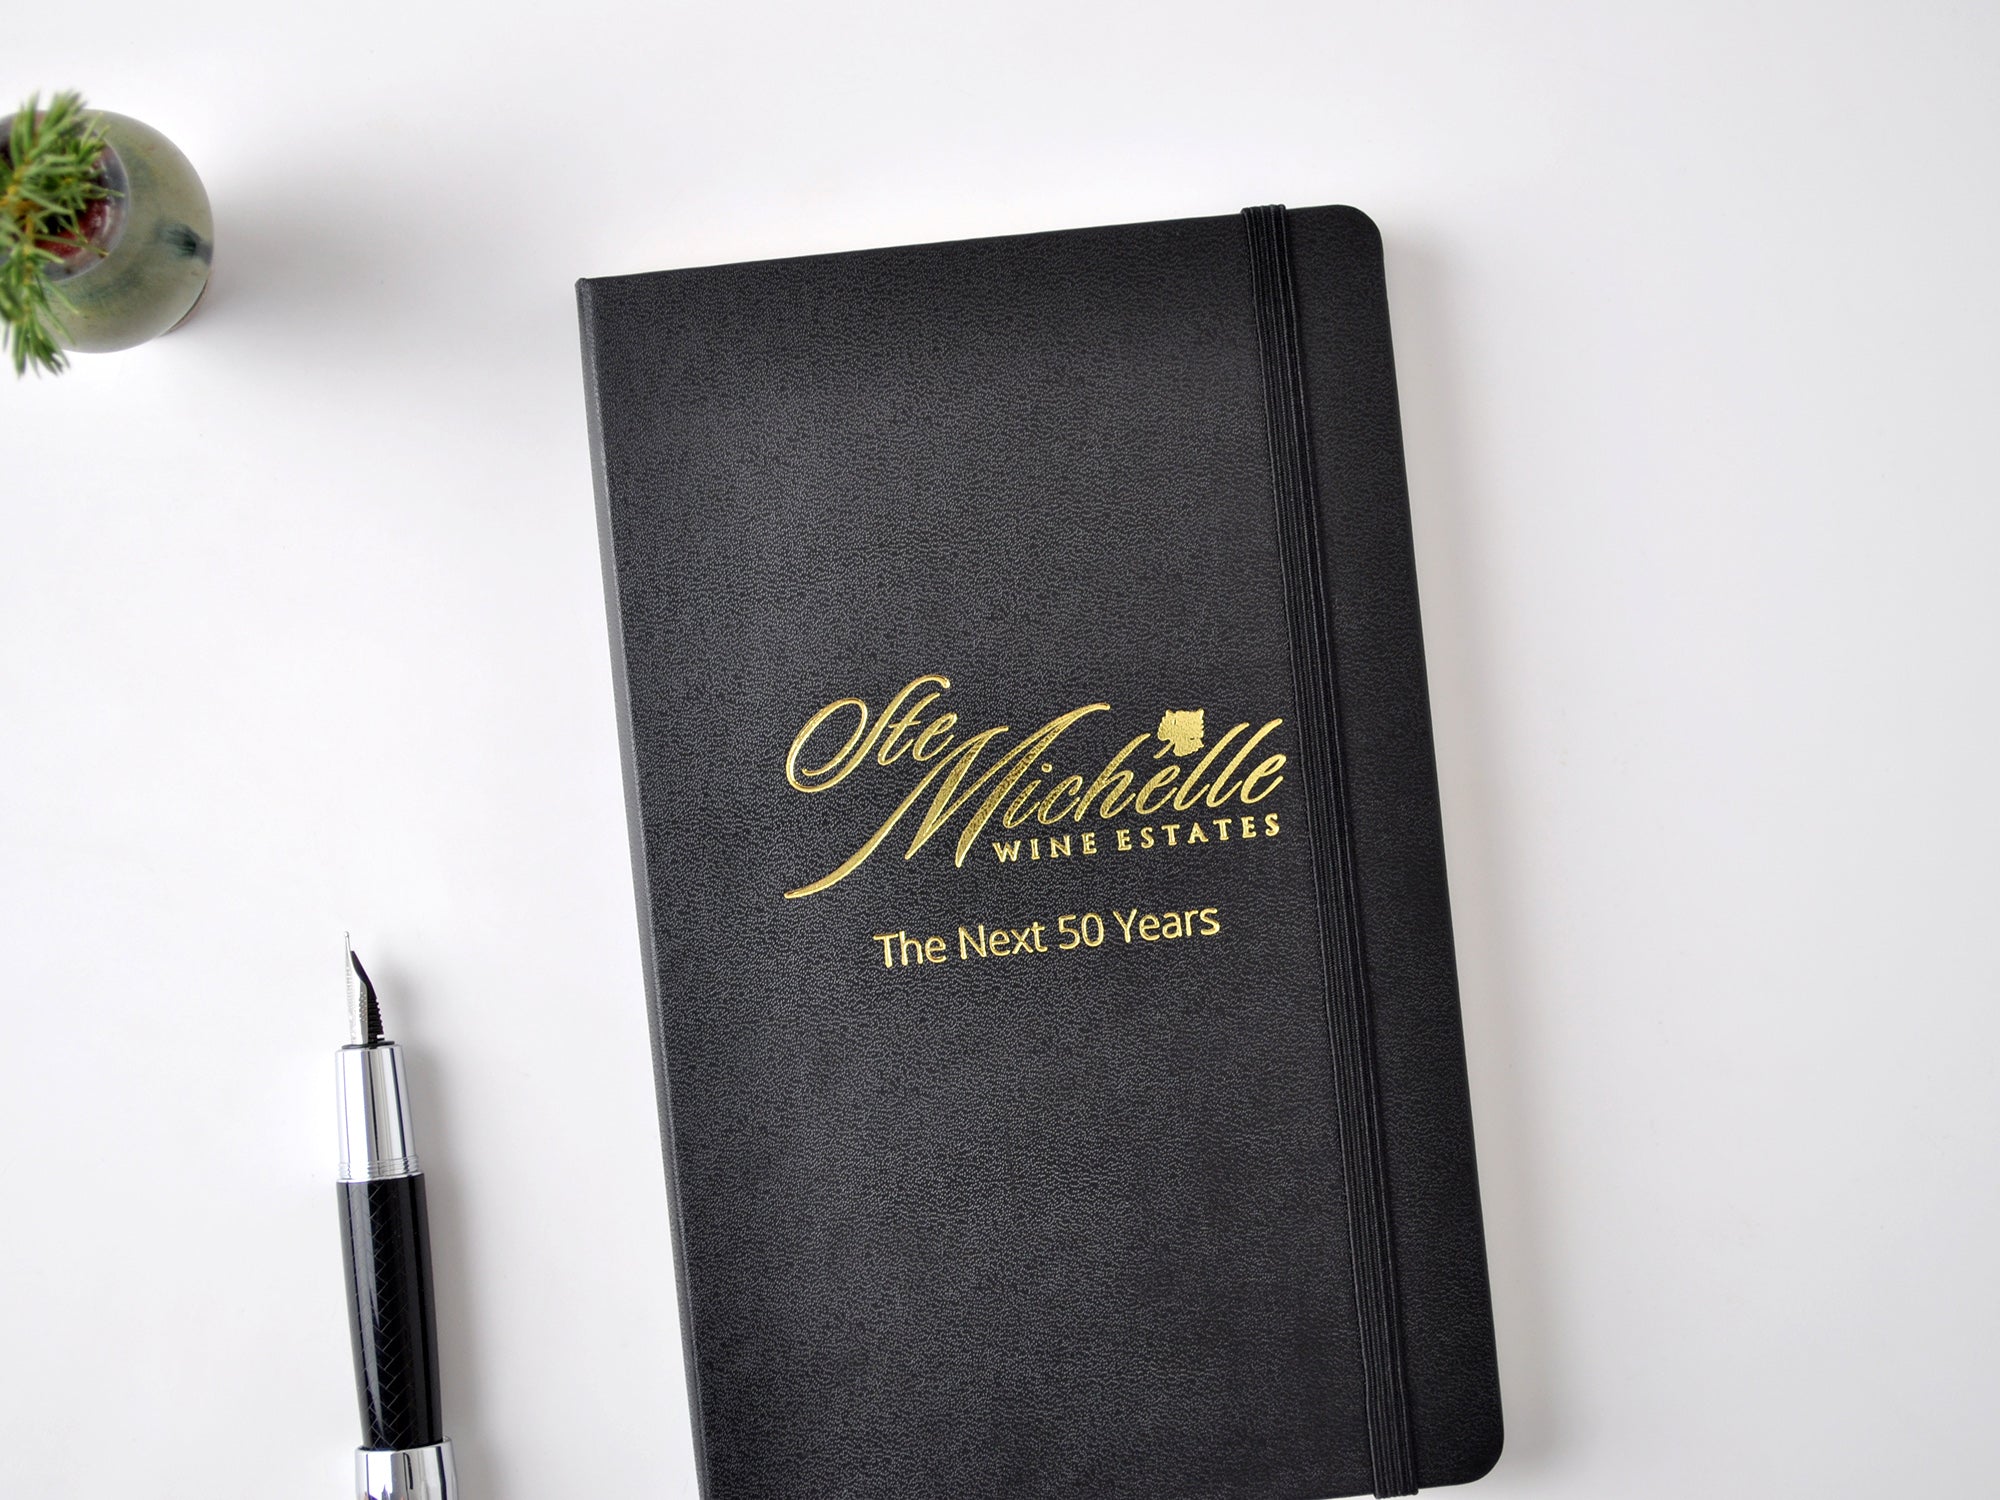 Classic Moleskin Notebook — Twenty Stories